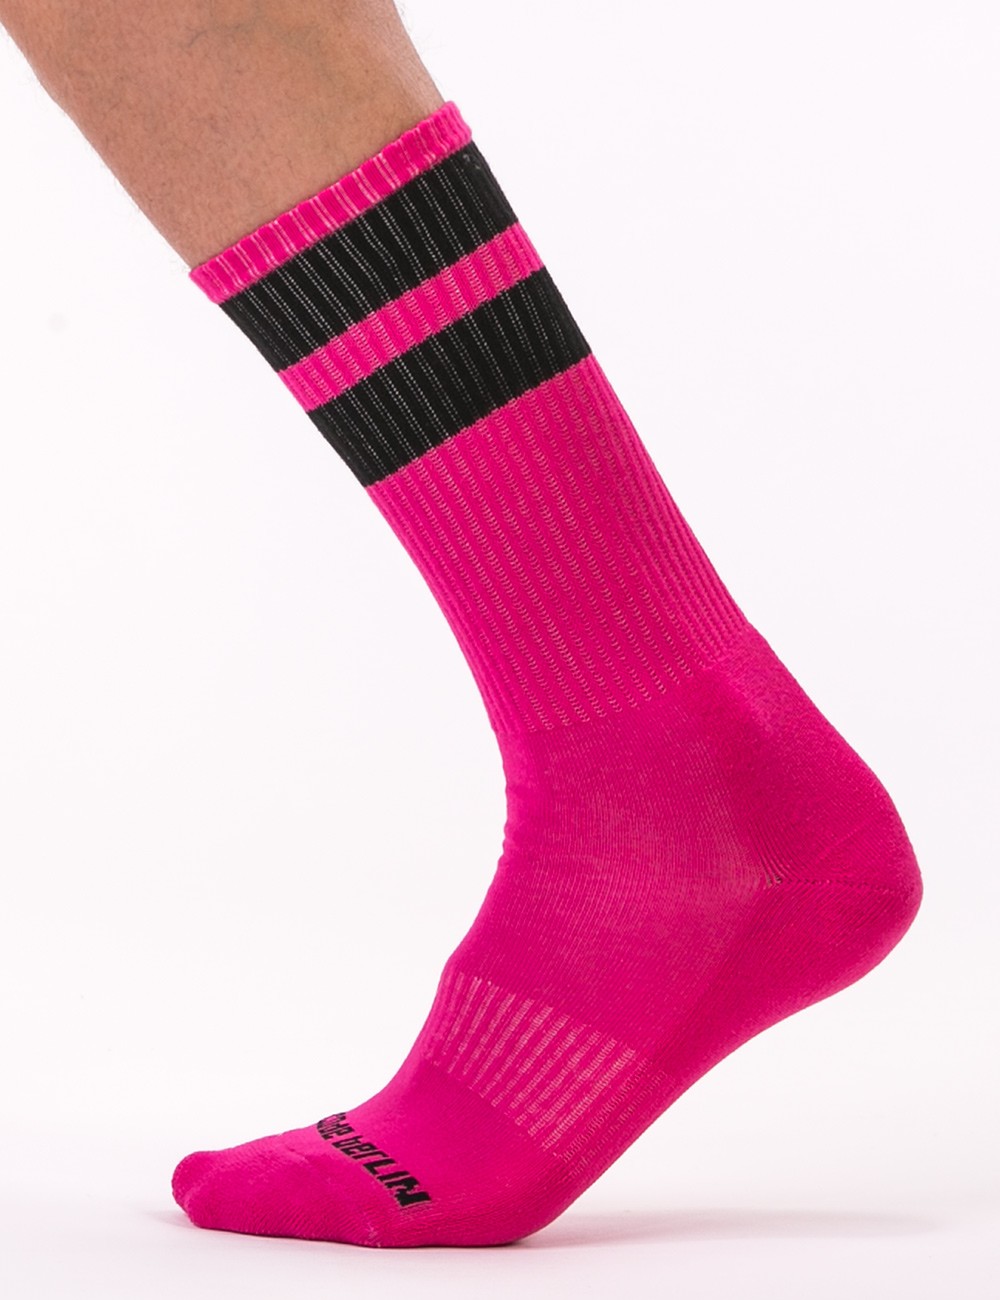 Gym Socks - Pink-Black